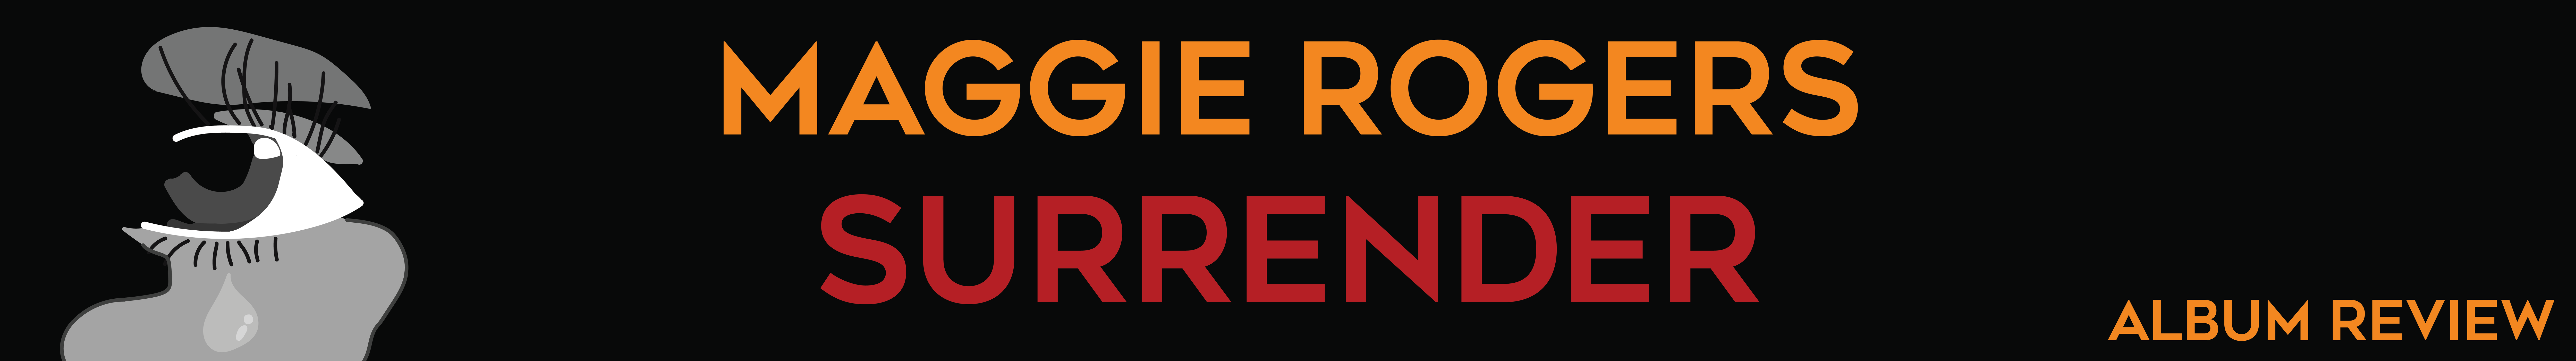 Album Review: Maggie Rogers Surrender